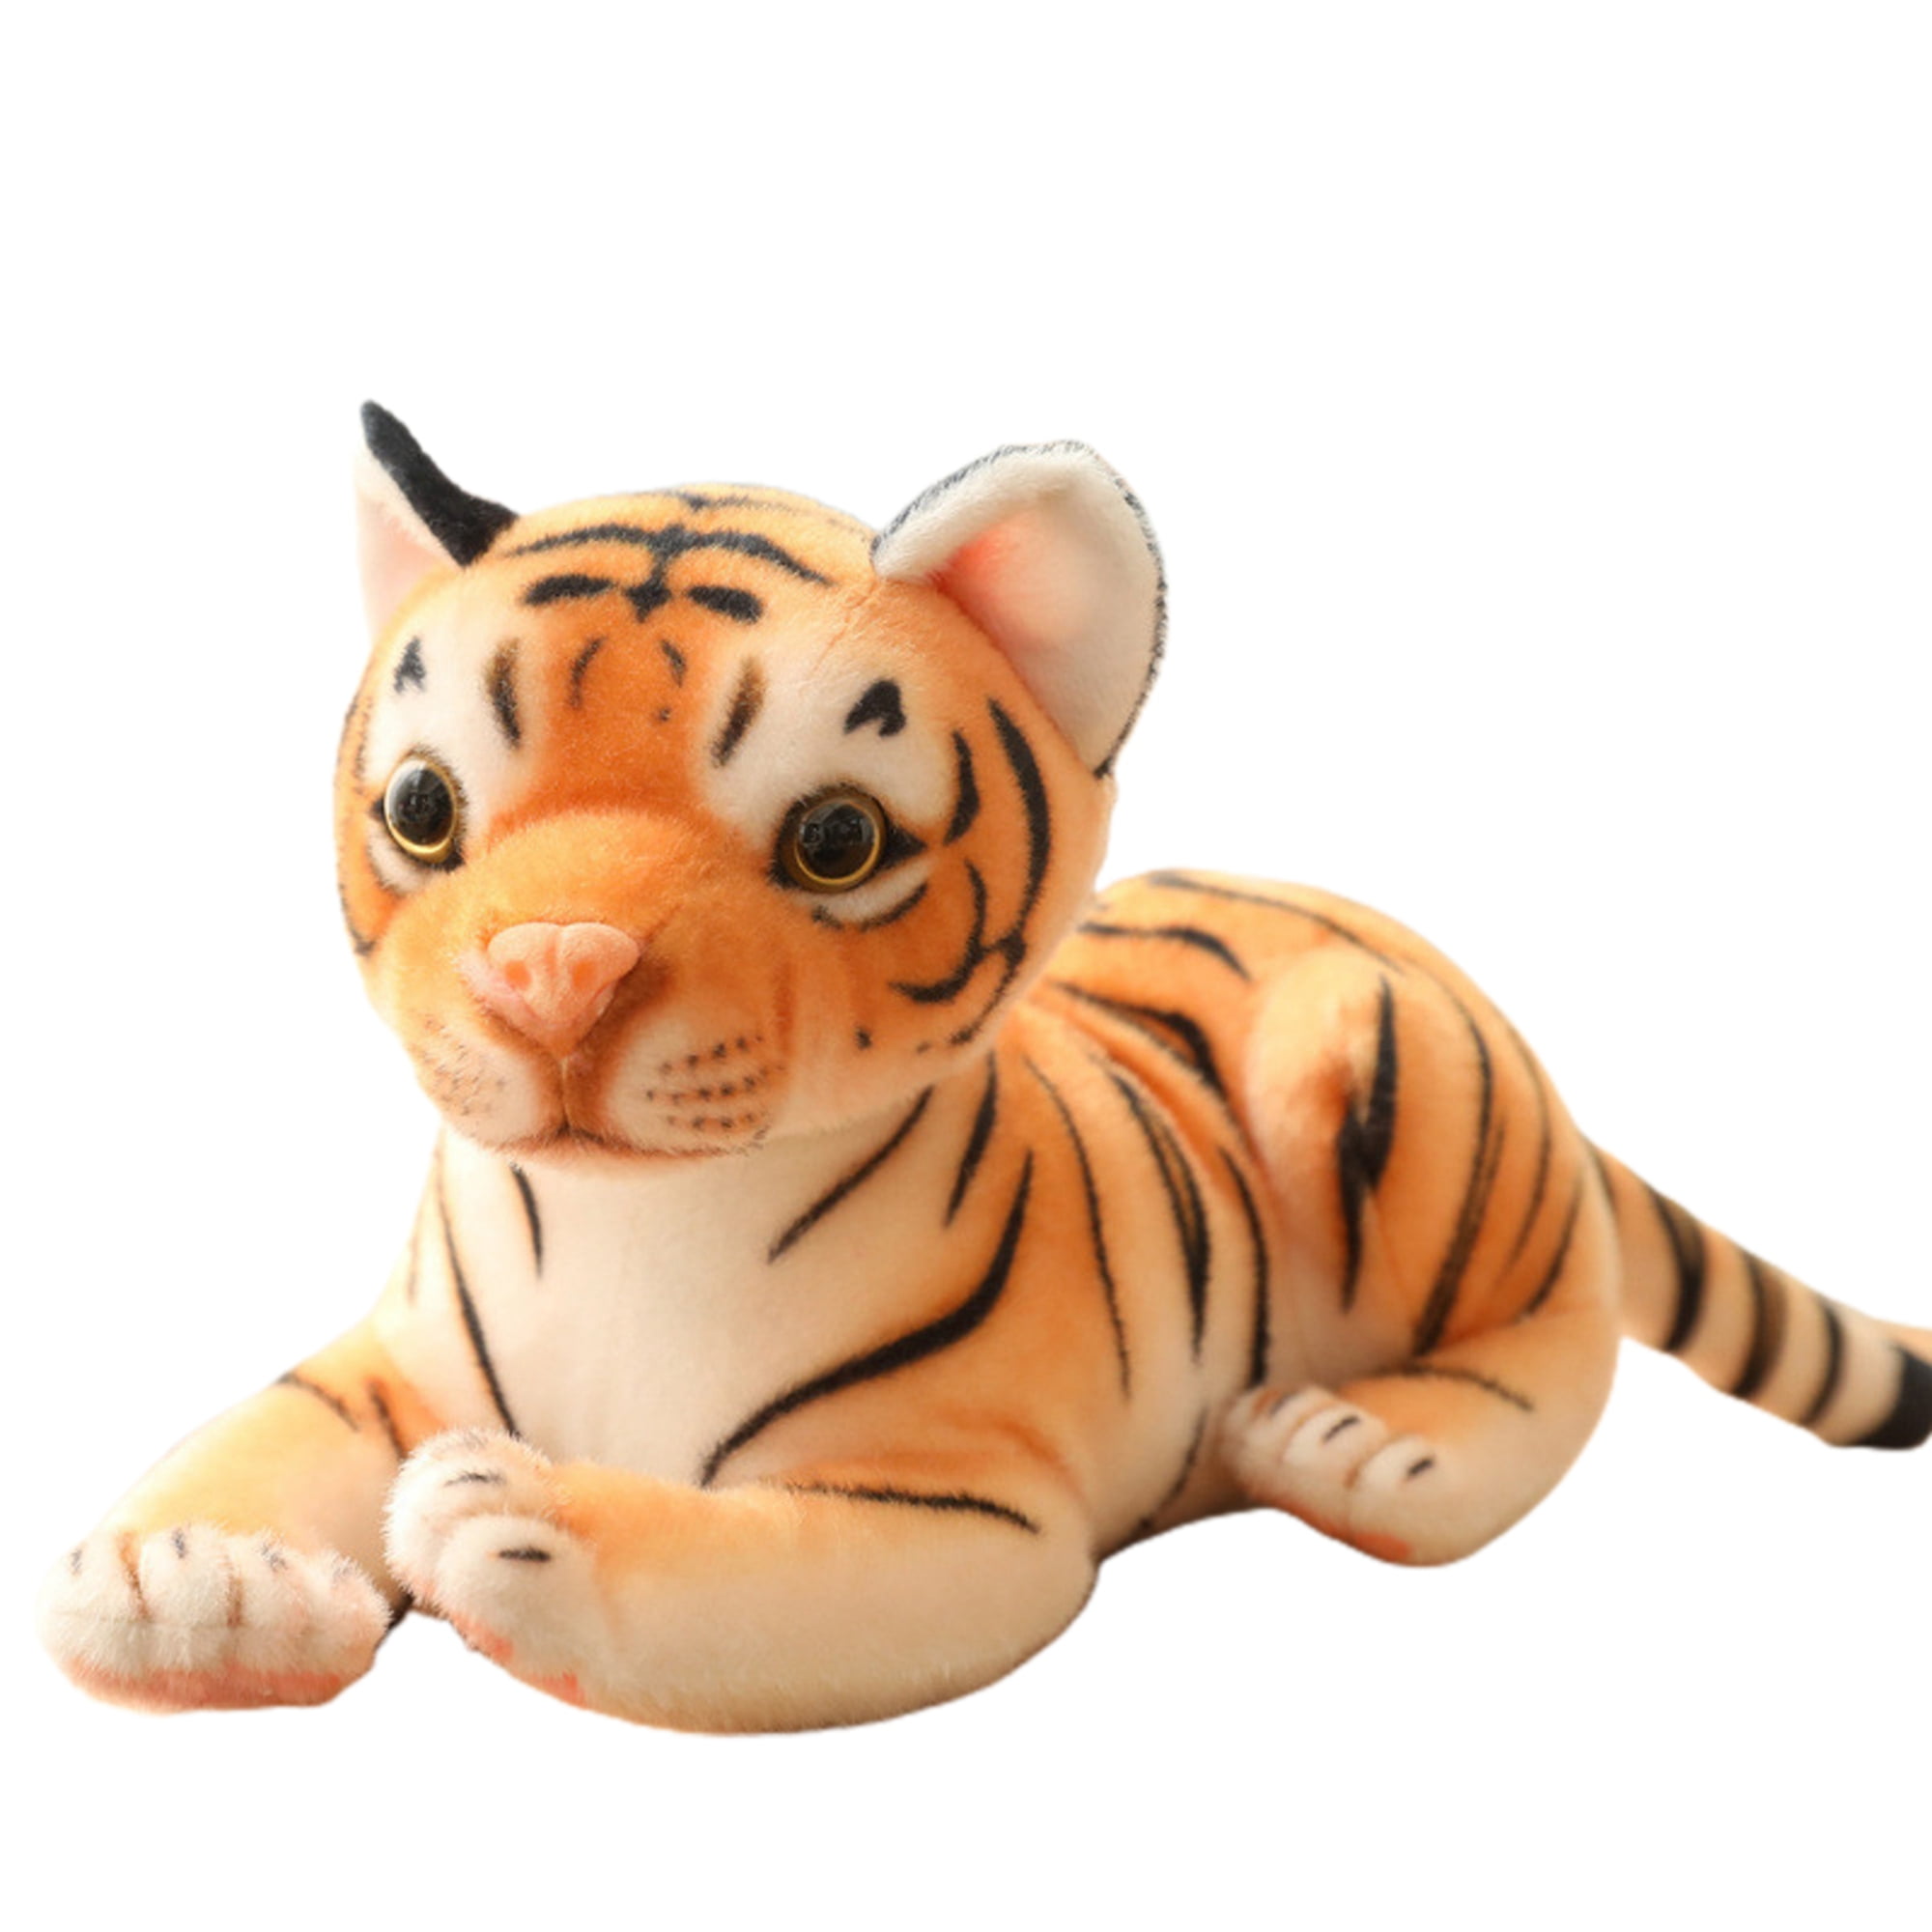 Baby Toy Cute Plush Mini Tiger Animal Soft Stuffed Pillow Children Kids Gifts 